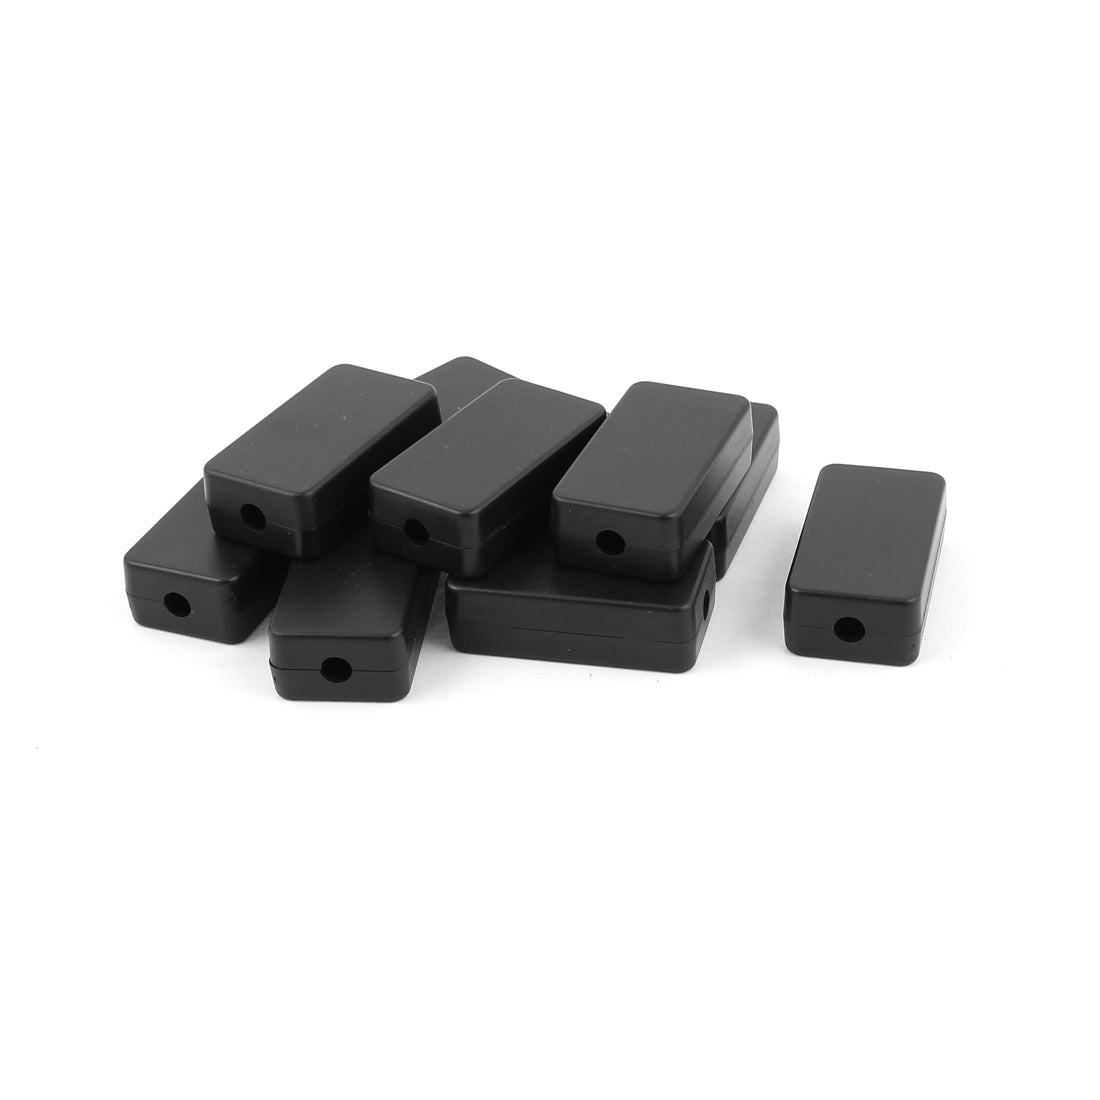 uxcell Uxcell 10 Pcs 48mm x 26mm x 15mm Rectangular Plastic Electric Case DIY Junction Box Black